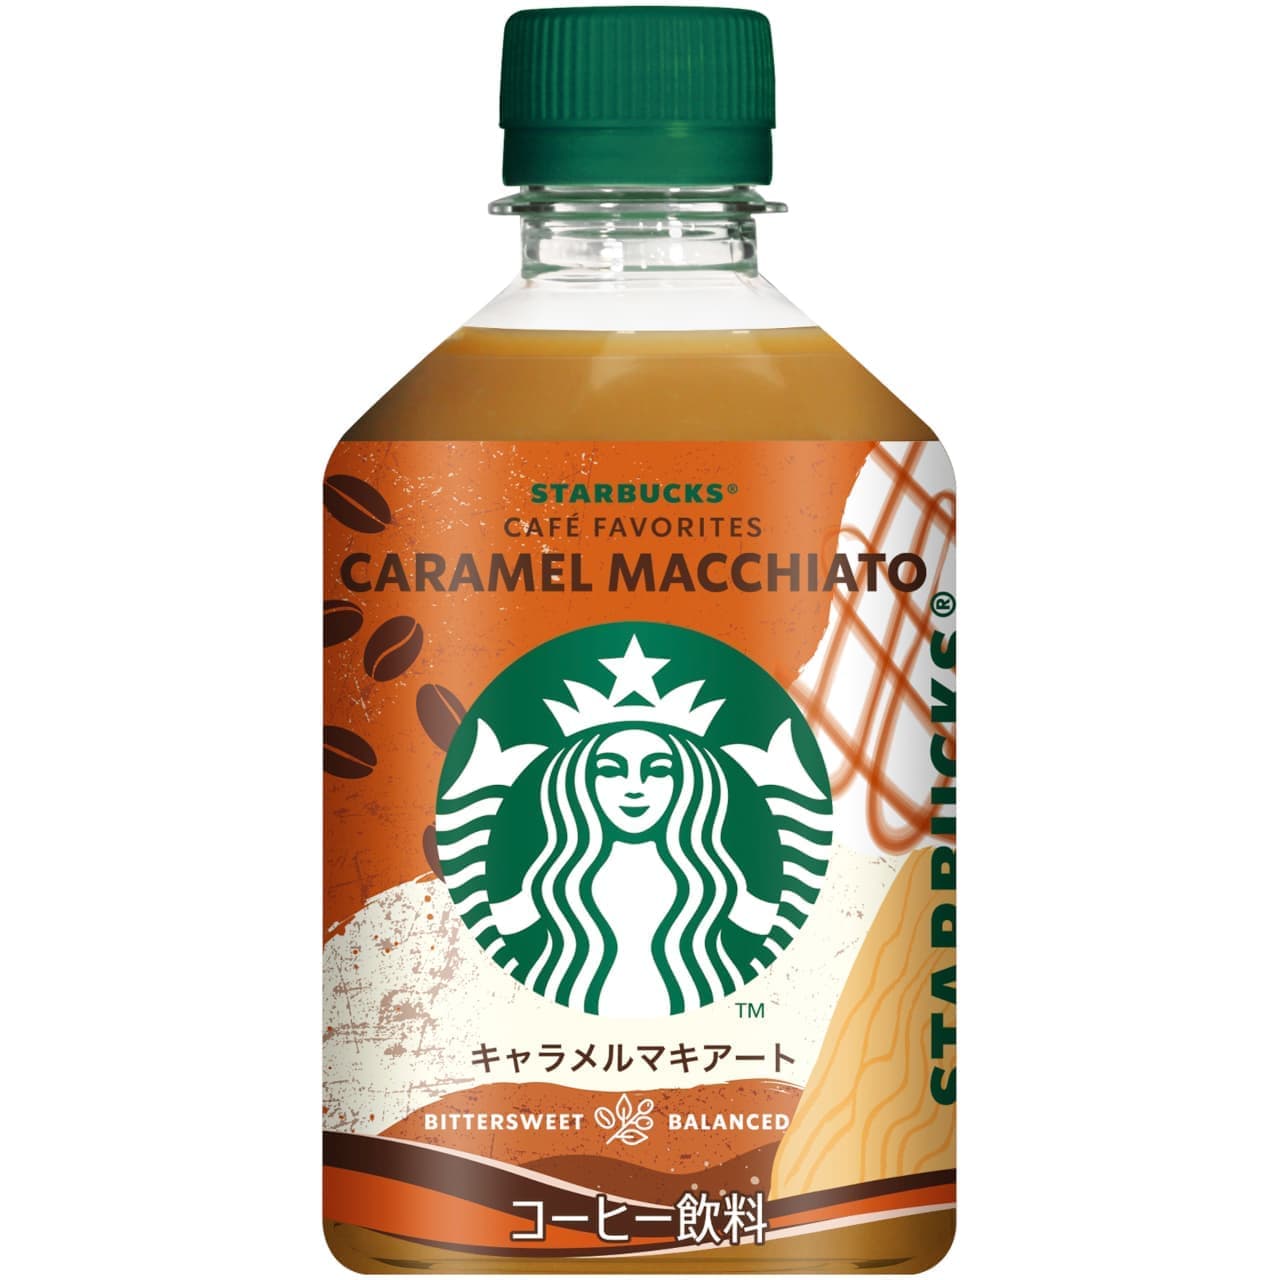 Suntory Foods "Starbucks CAFE FAVORITES Caramel Macchiato